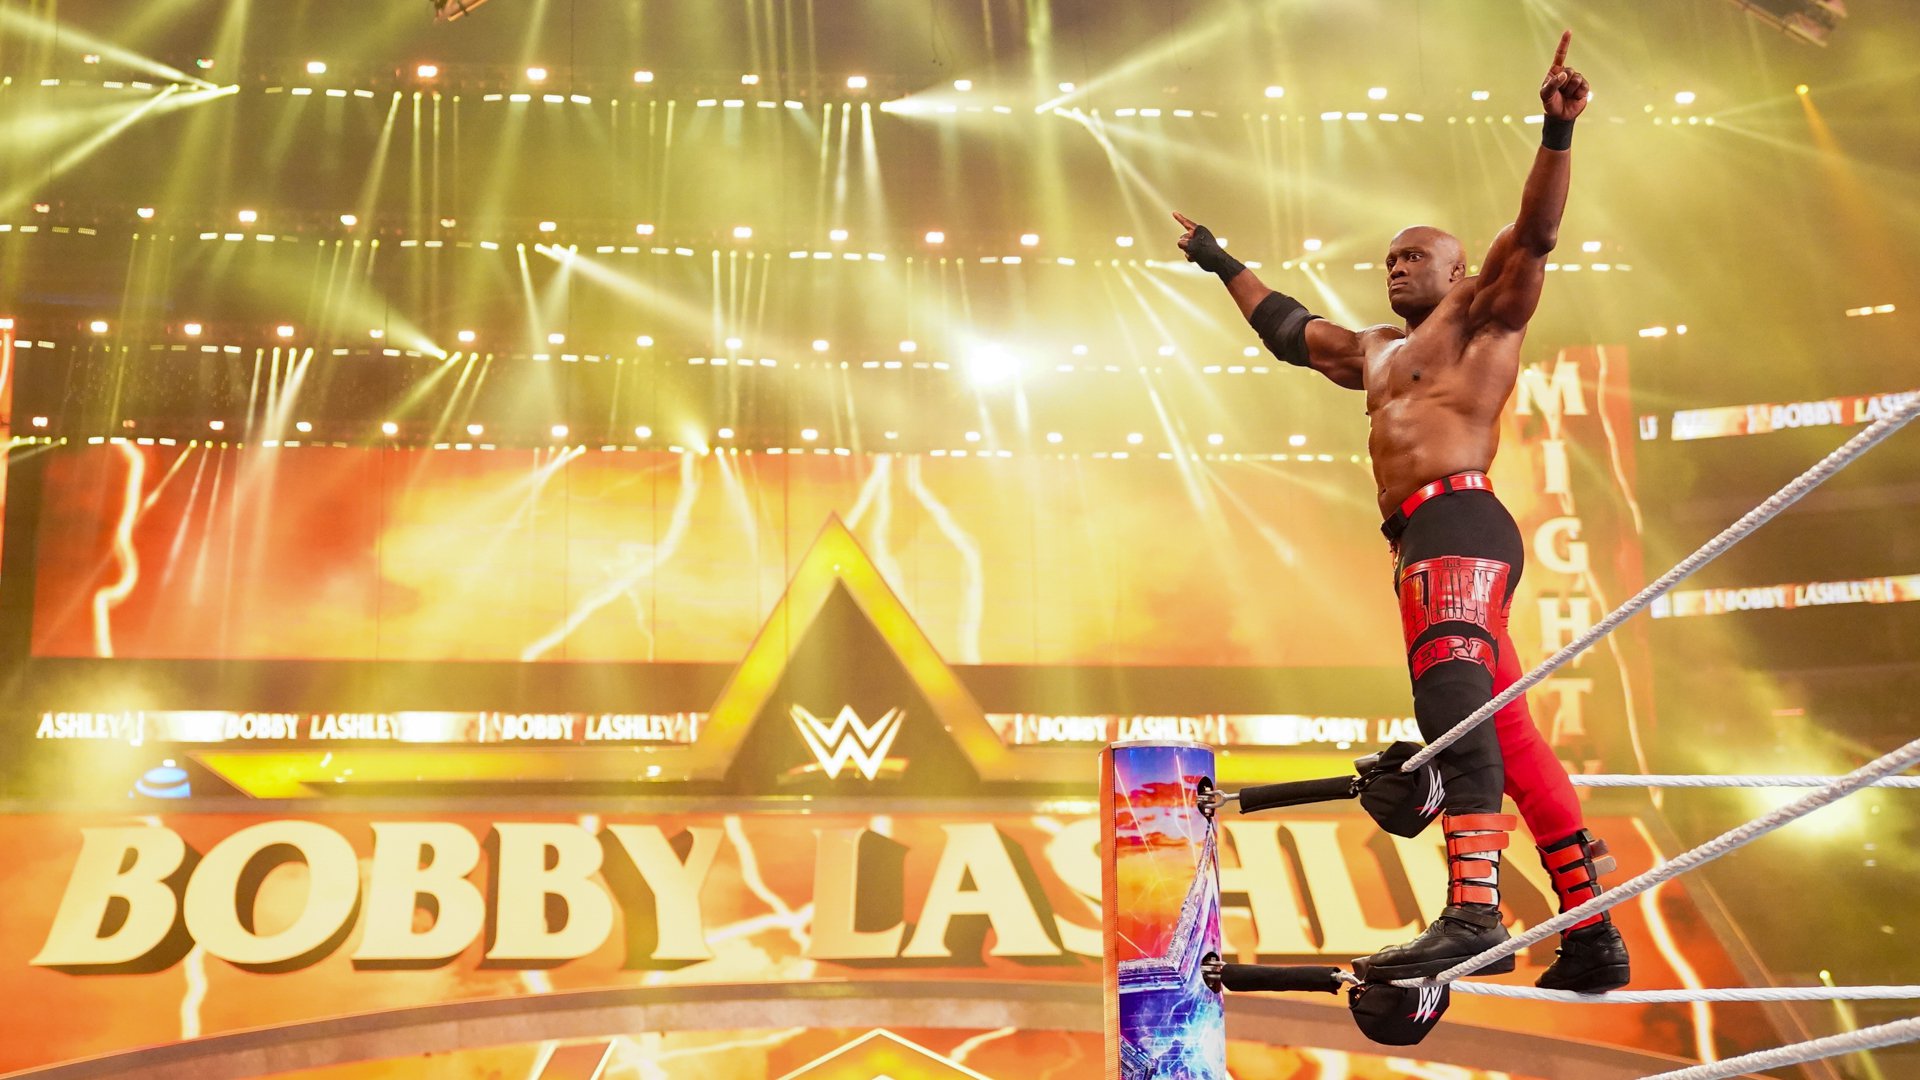 Estrela da AEW quer luta na WWE WrestleMania 39 contra Bobby Lashley